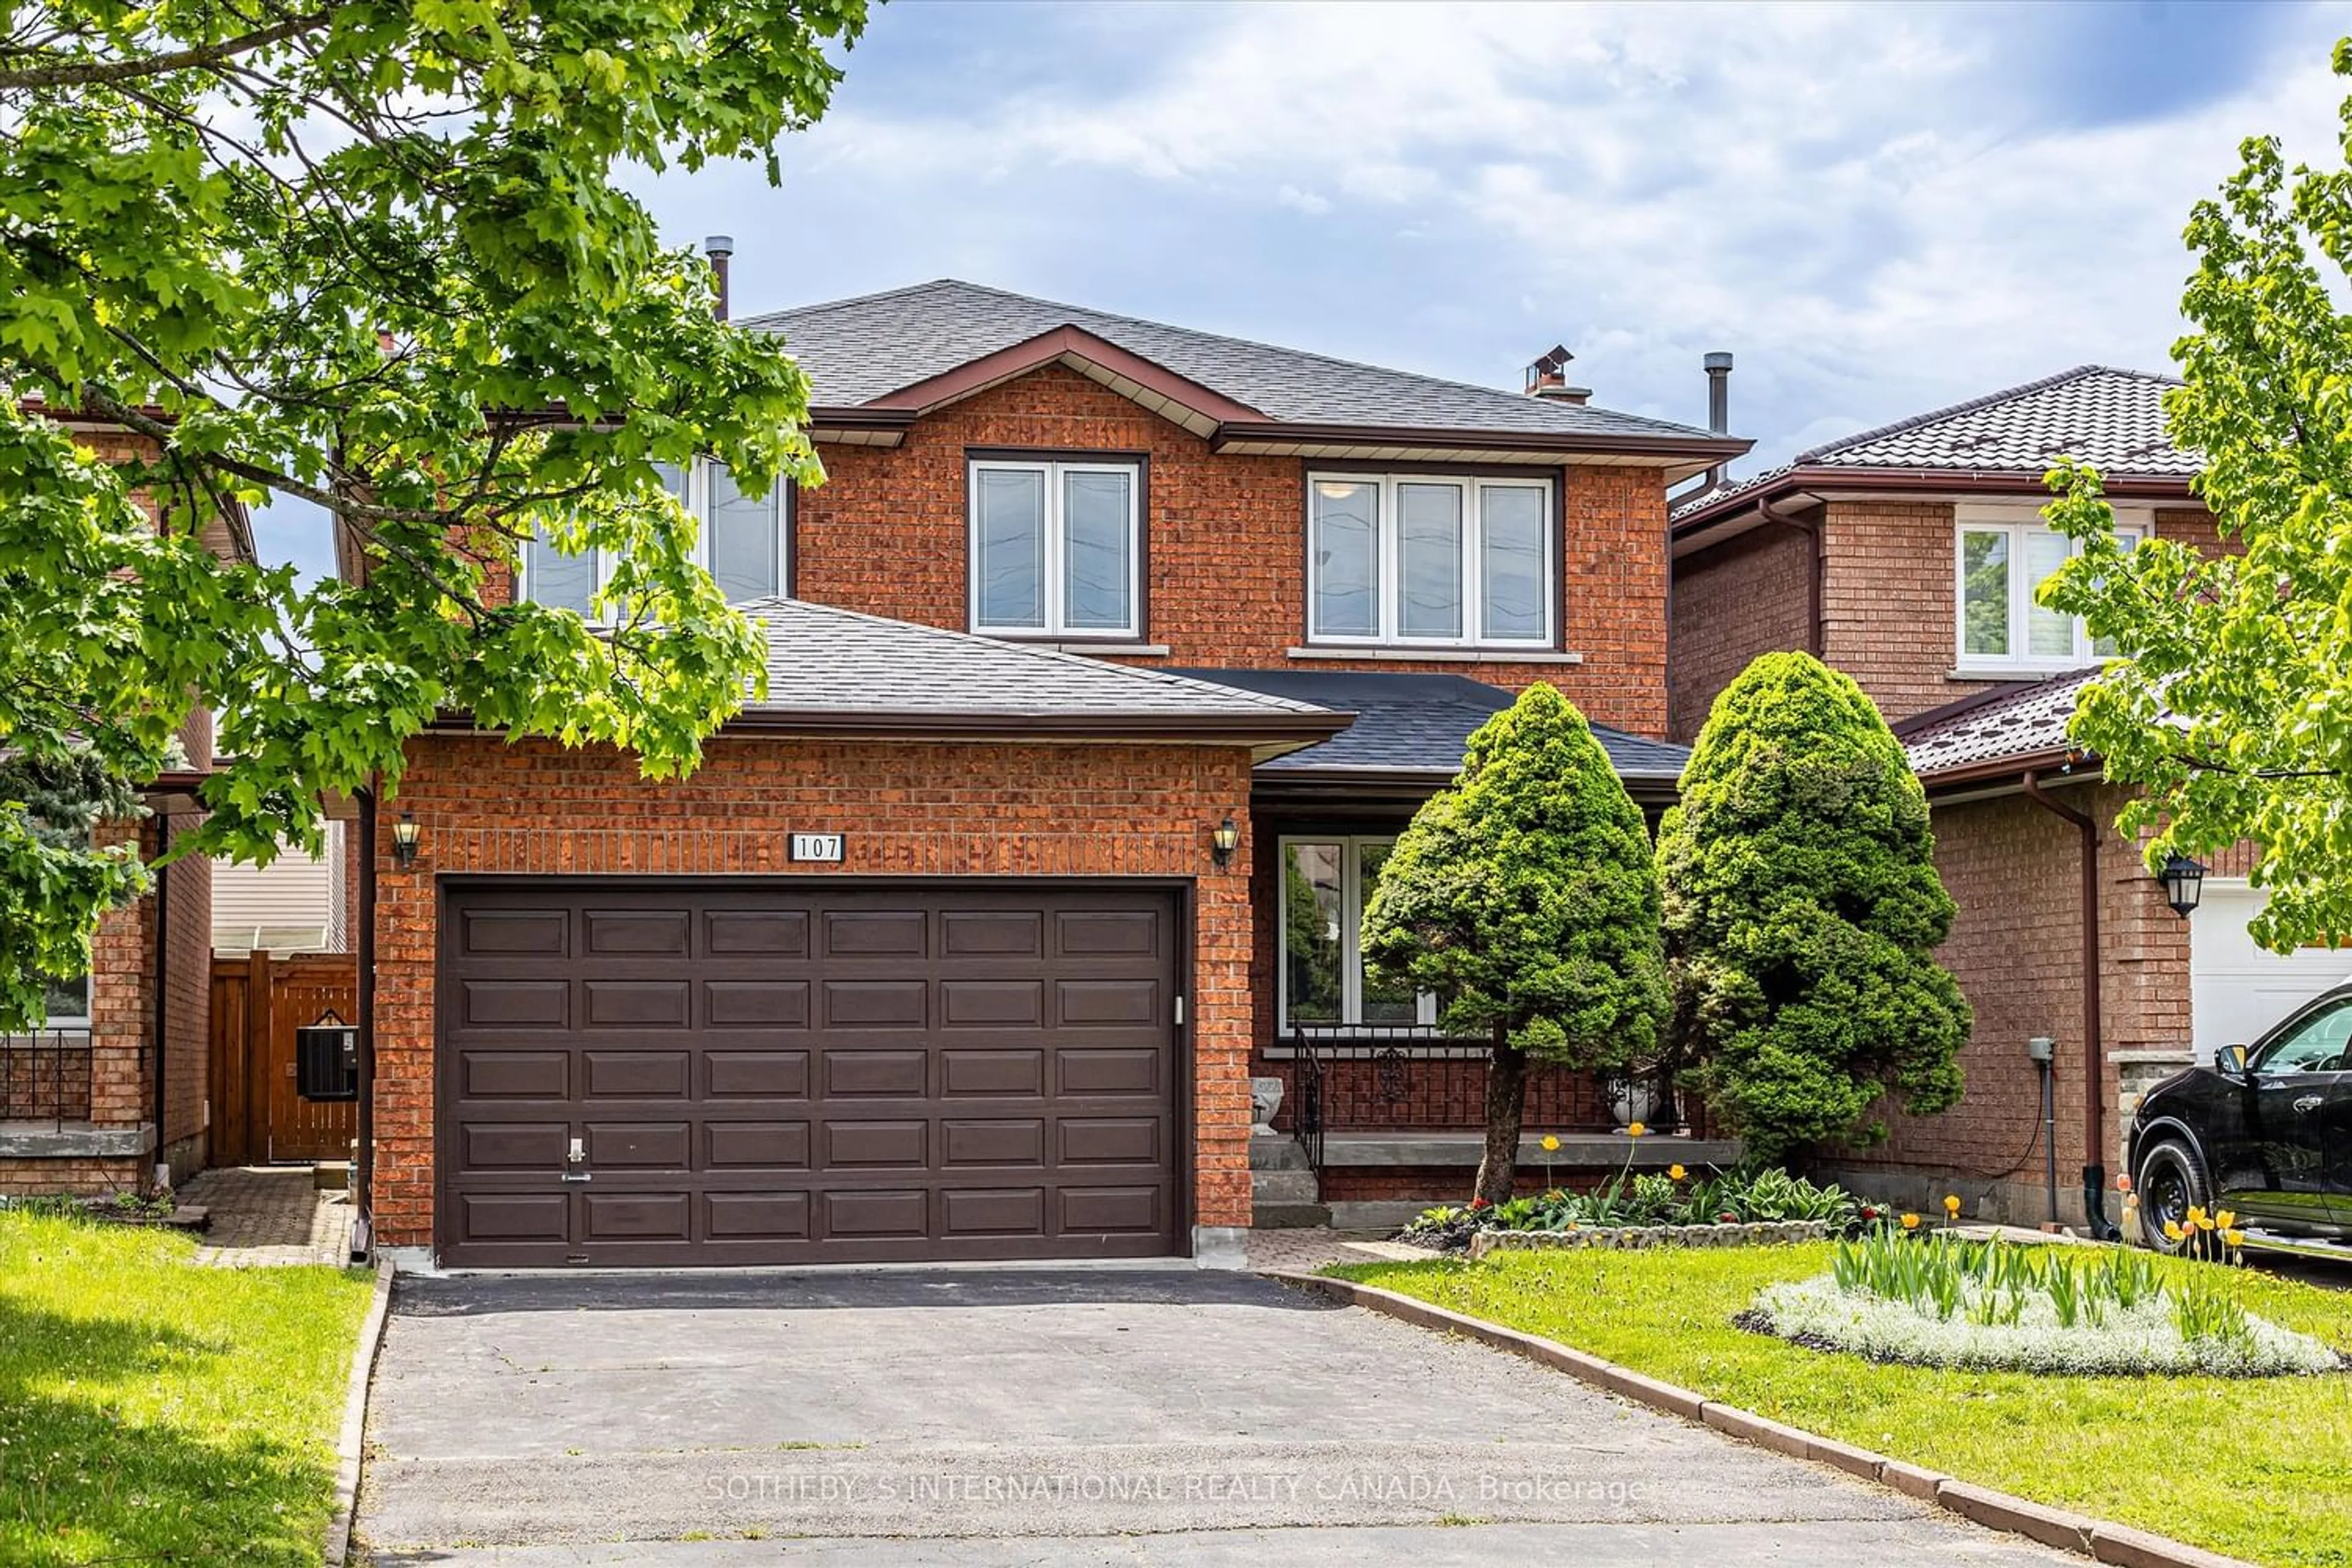 Home with brick exterior material for 107 Lansbury Dr, Toronto Ontario M1V 3R9